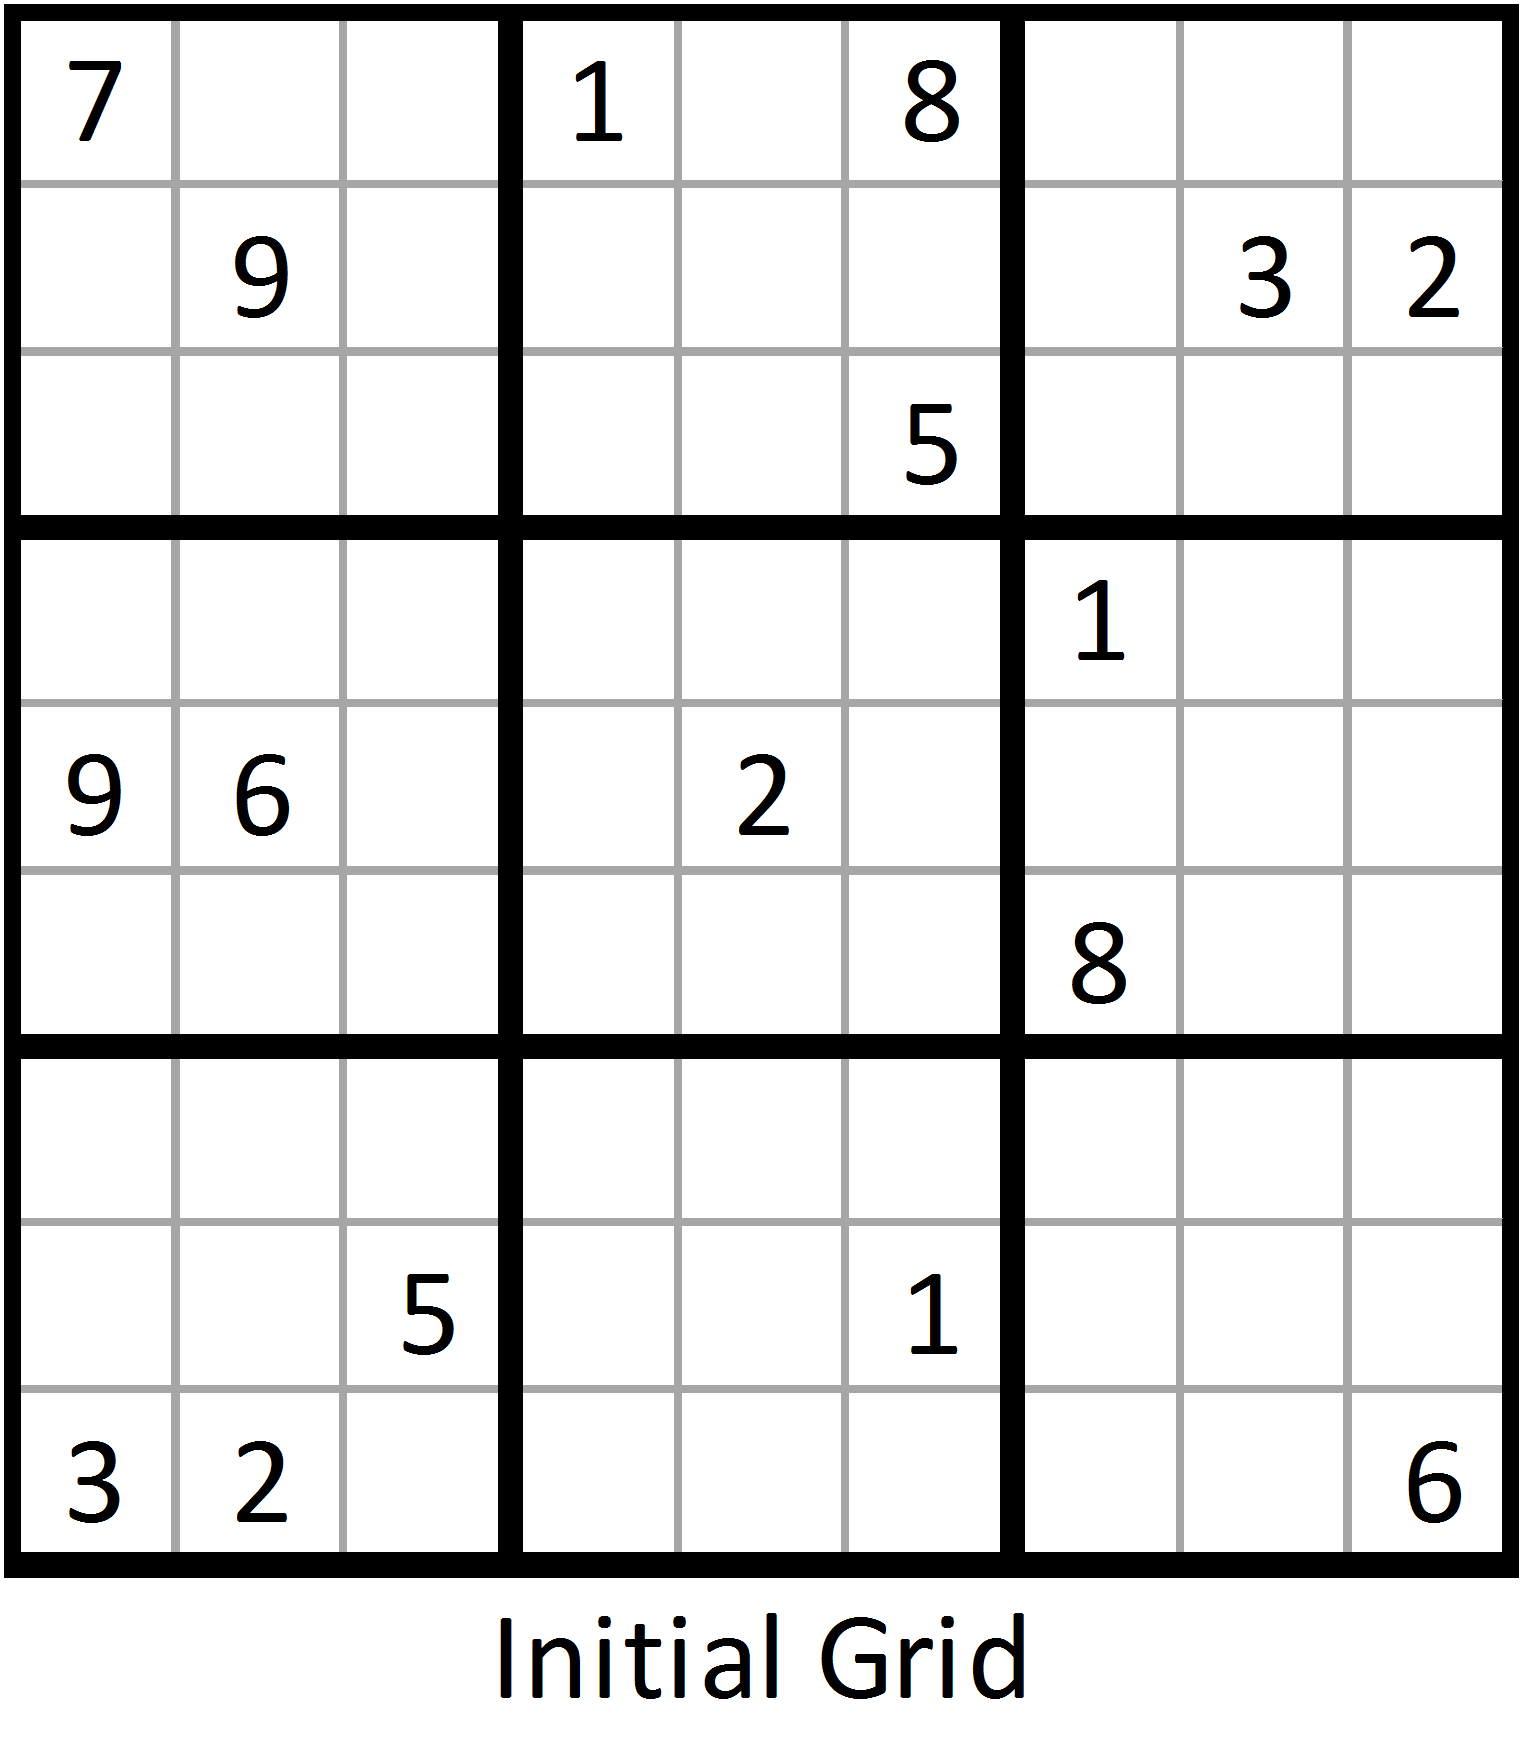 Sudoku Solver « Computer programming